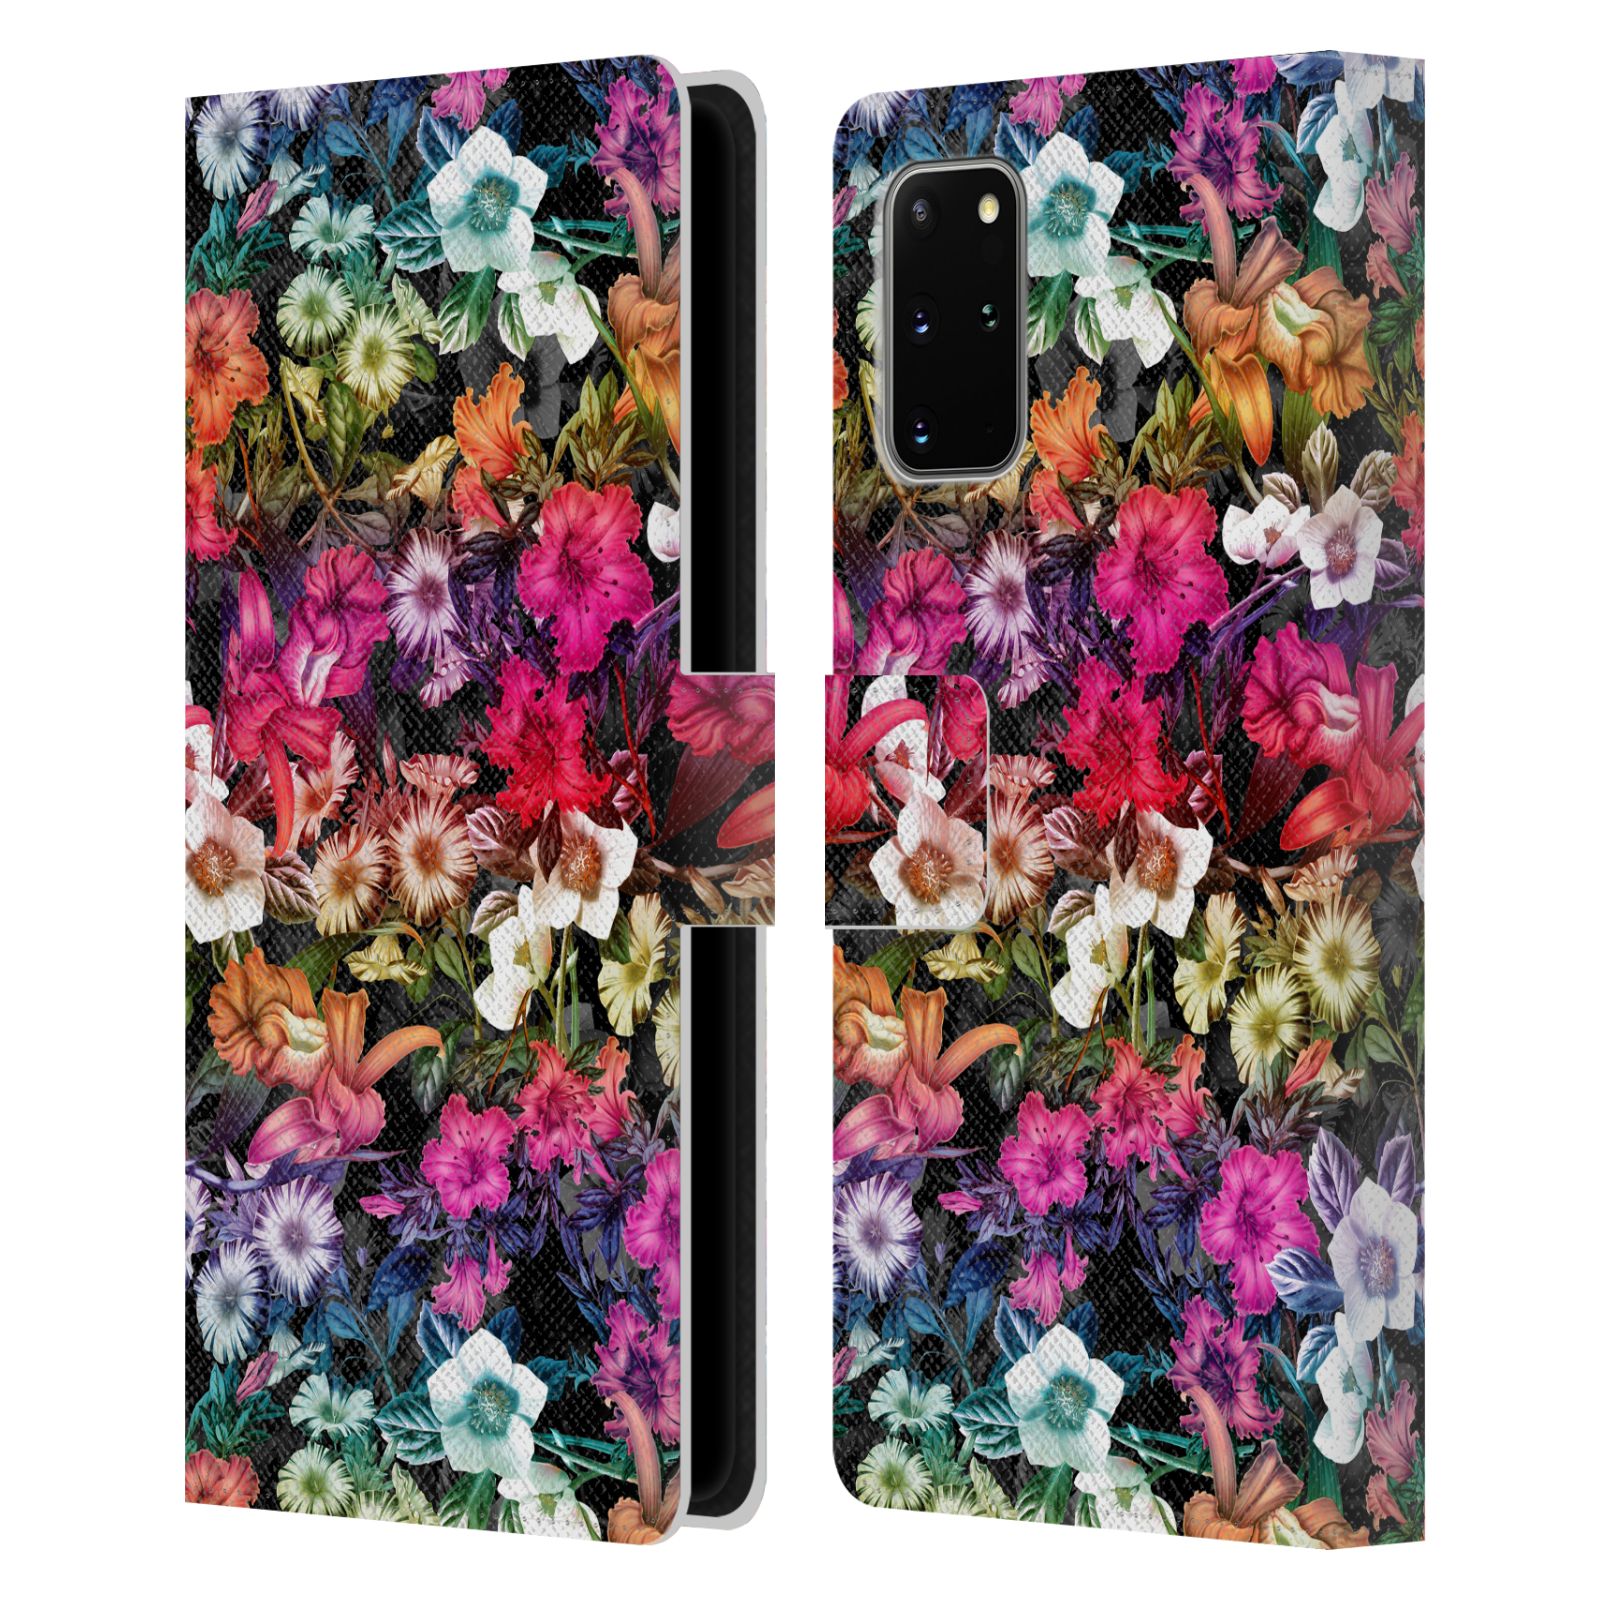 Pouzdro HEAD CASE pro mobil Samsung Galaxy S20+ / S20+ 5G - Burcu - Květiny multikolor